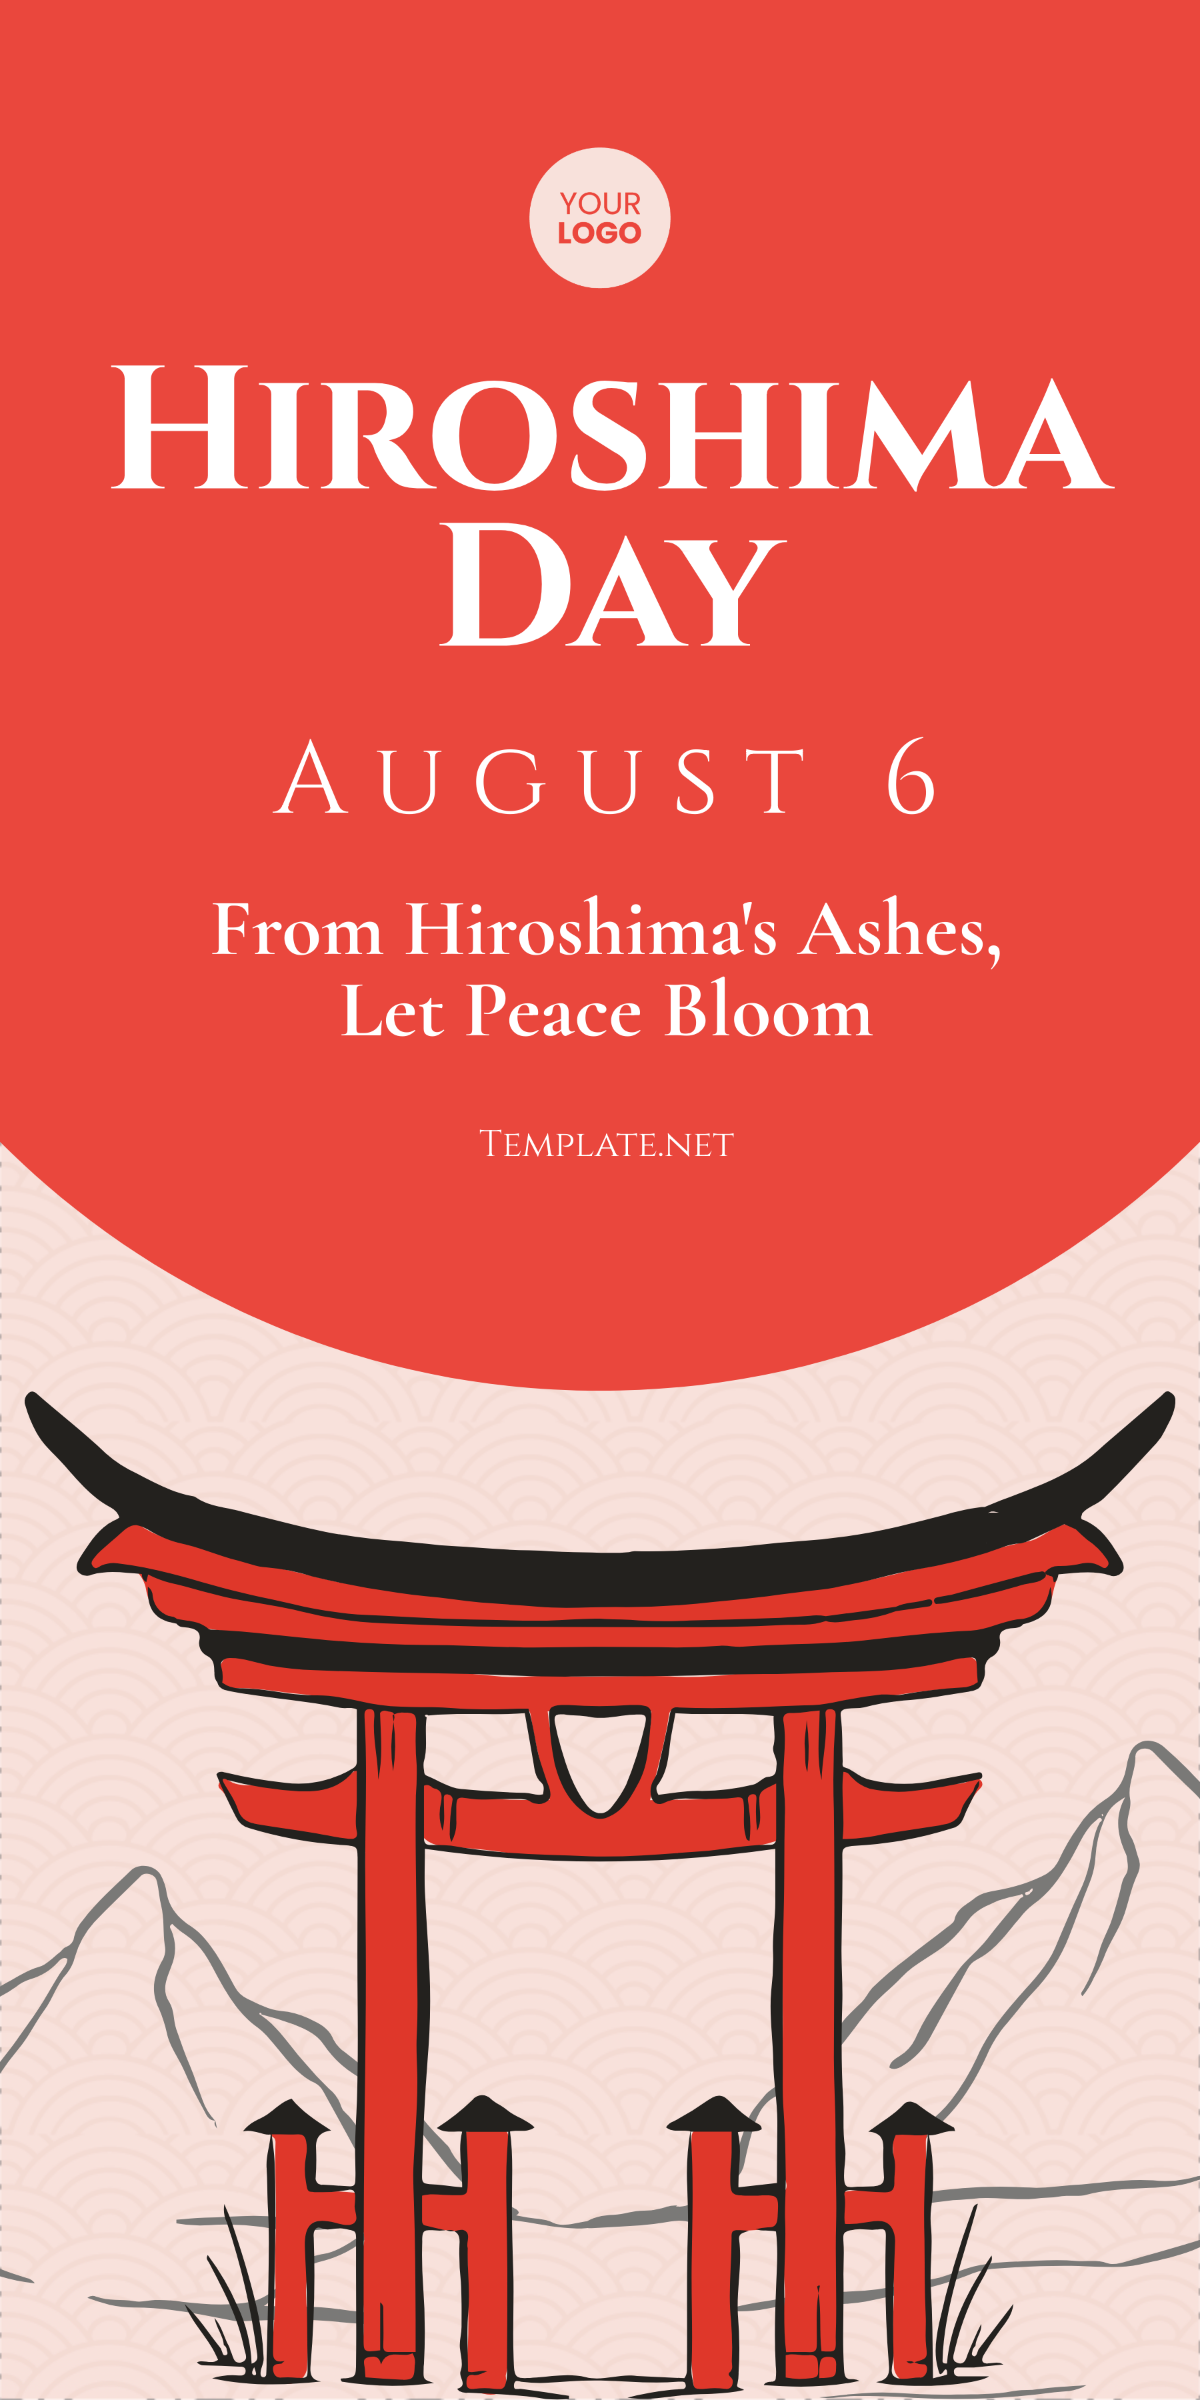 Hiroshima Day Roll Up Banner